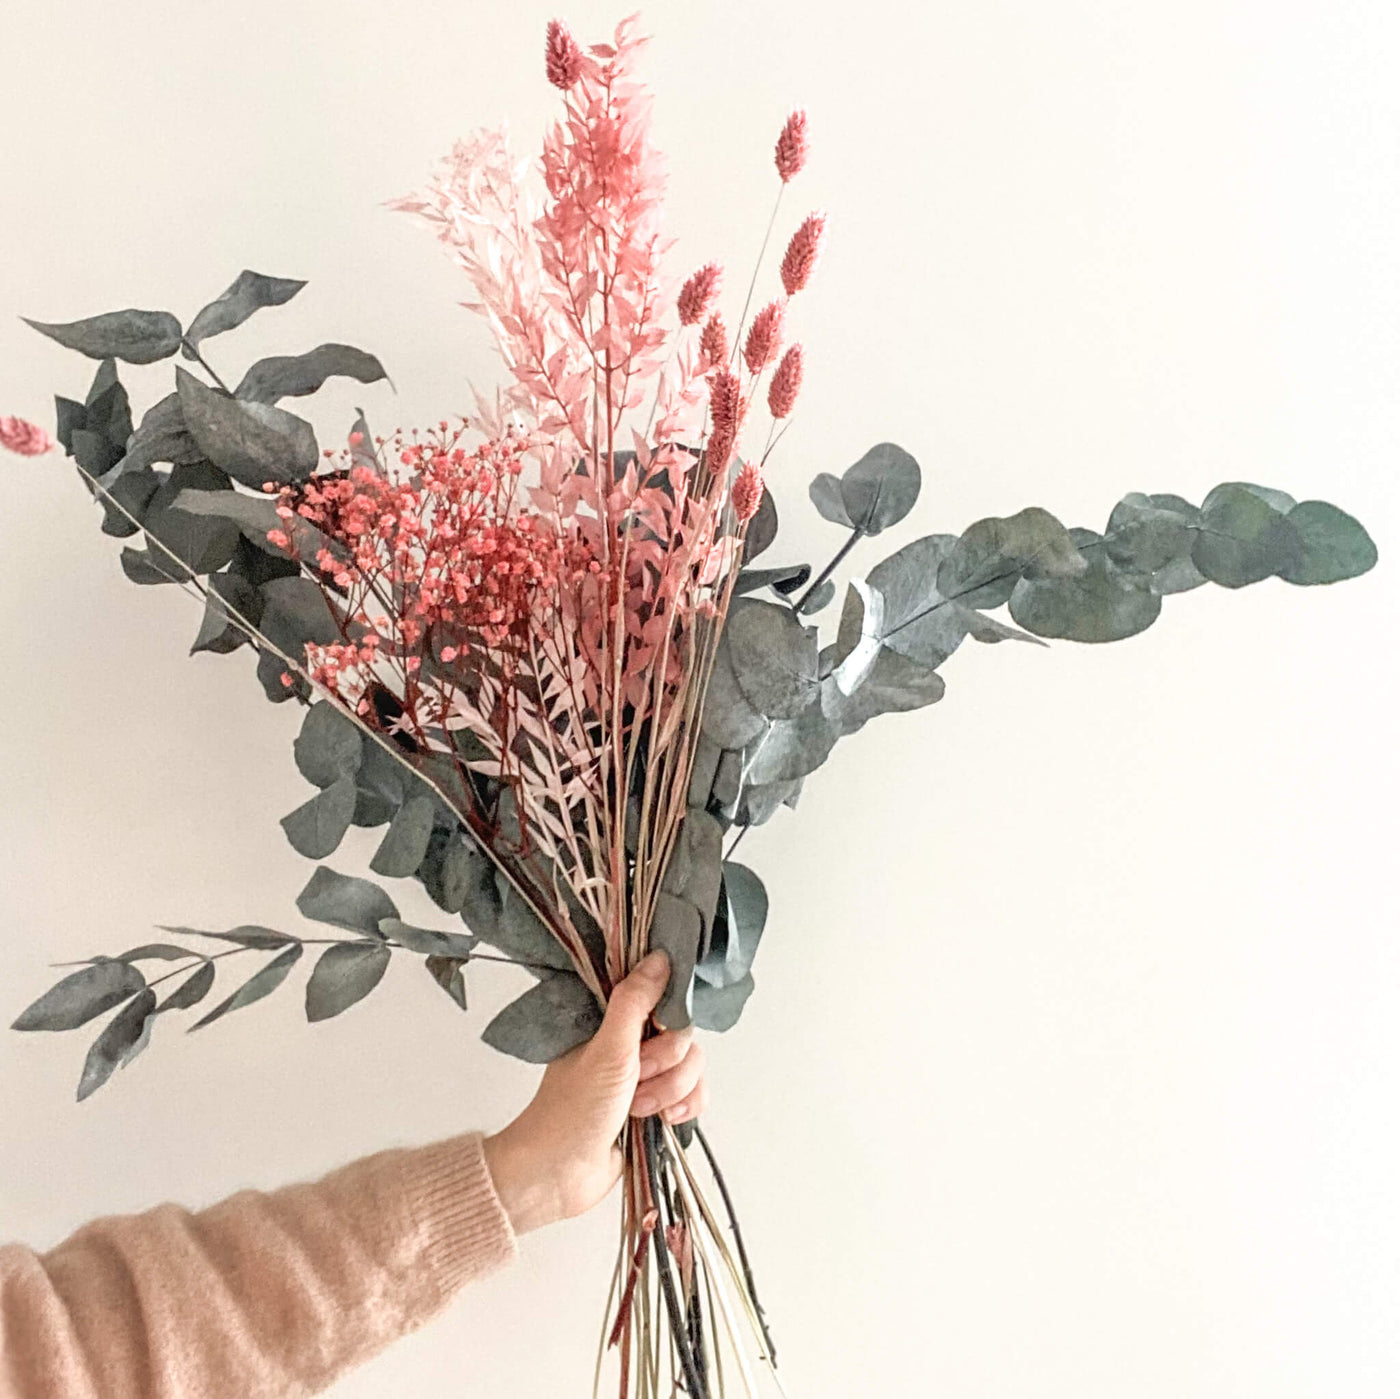 Trockenblumenstrauß Flamazing mit Eukalyptus | 70 cm I Trockenblumen Mix rosa